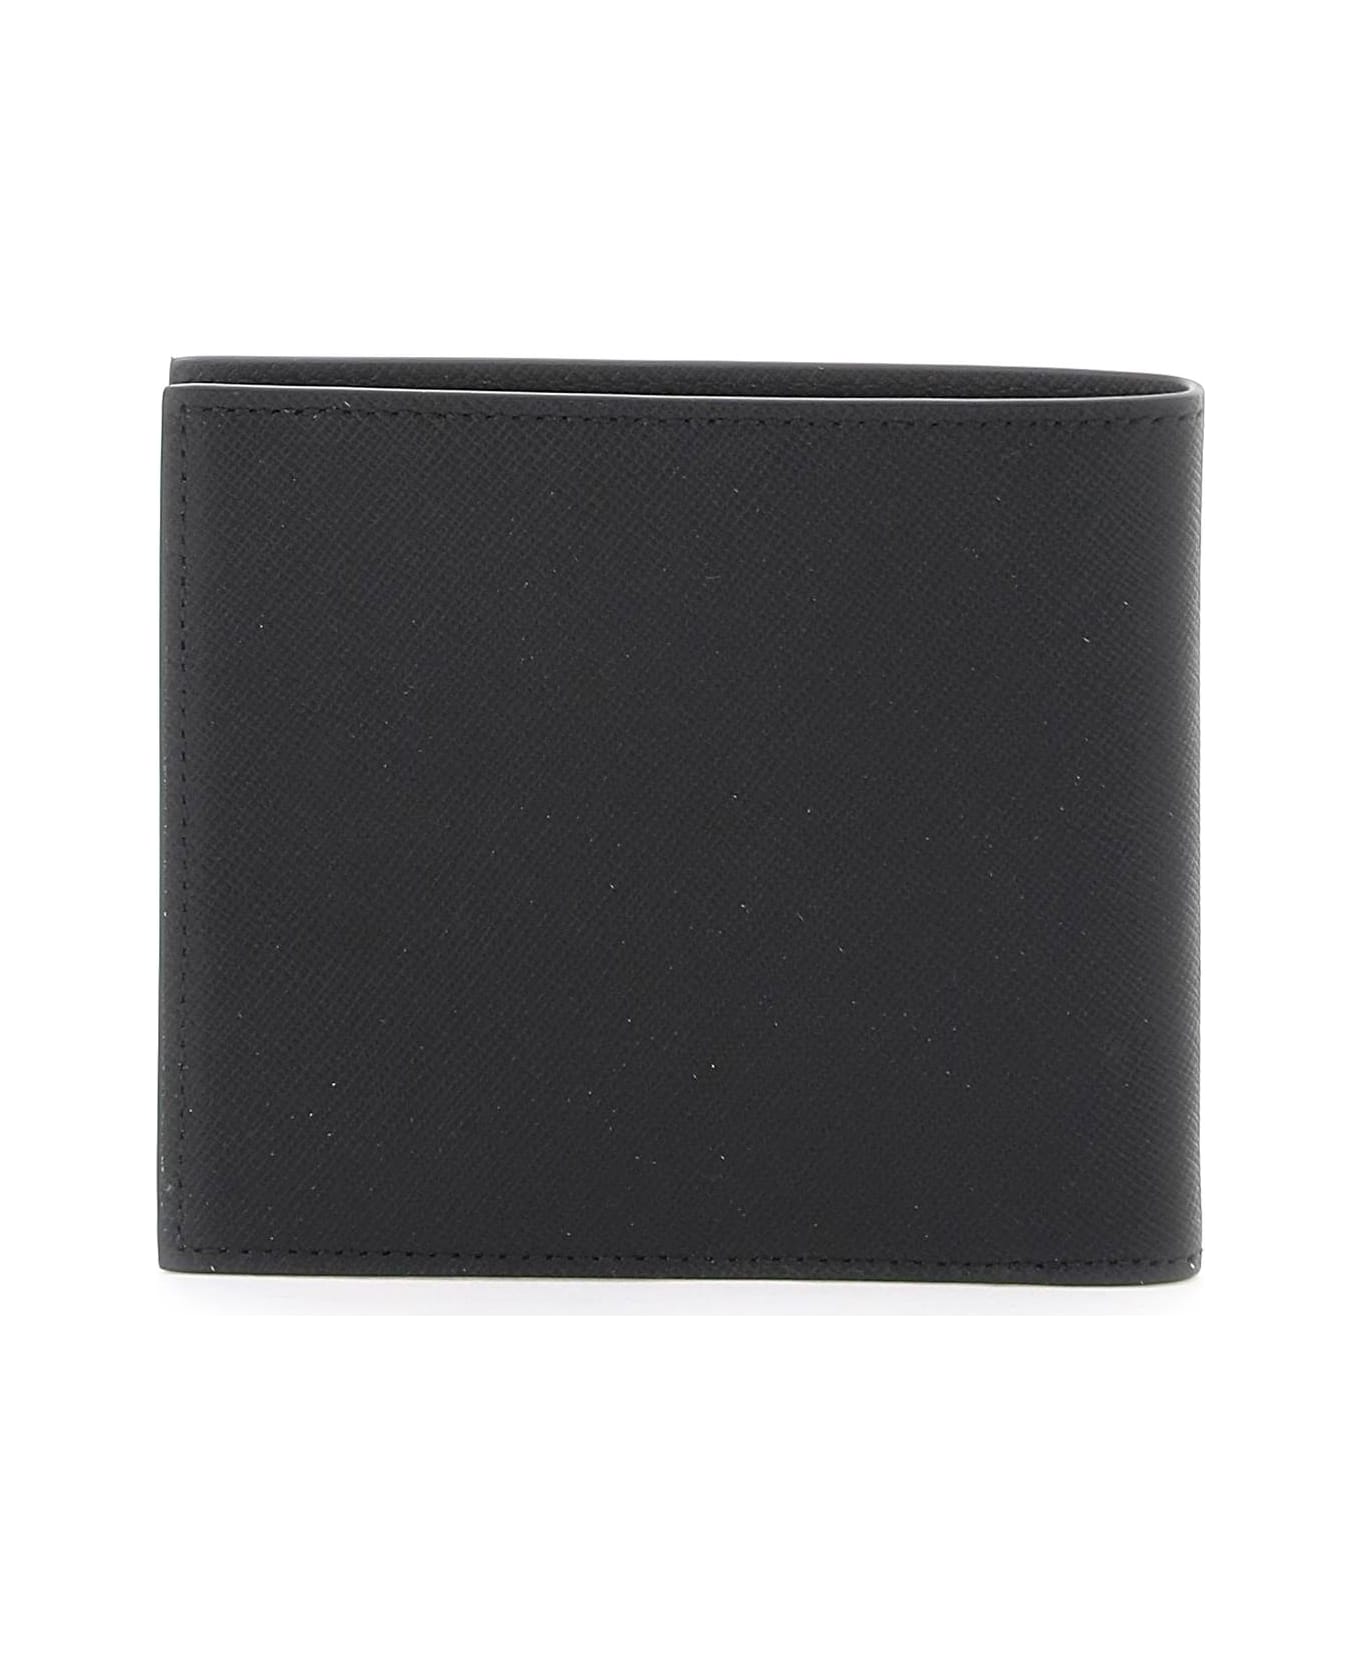 Paul Smith Leather Wallet - BLACK (Black)